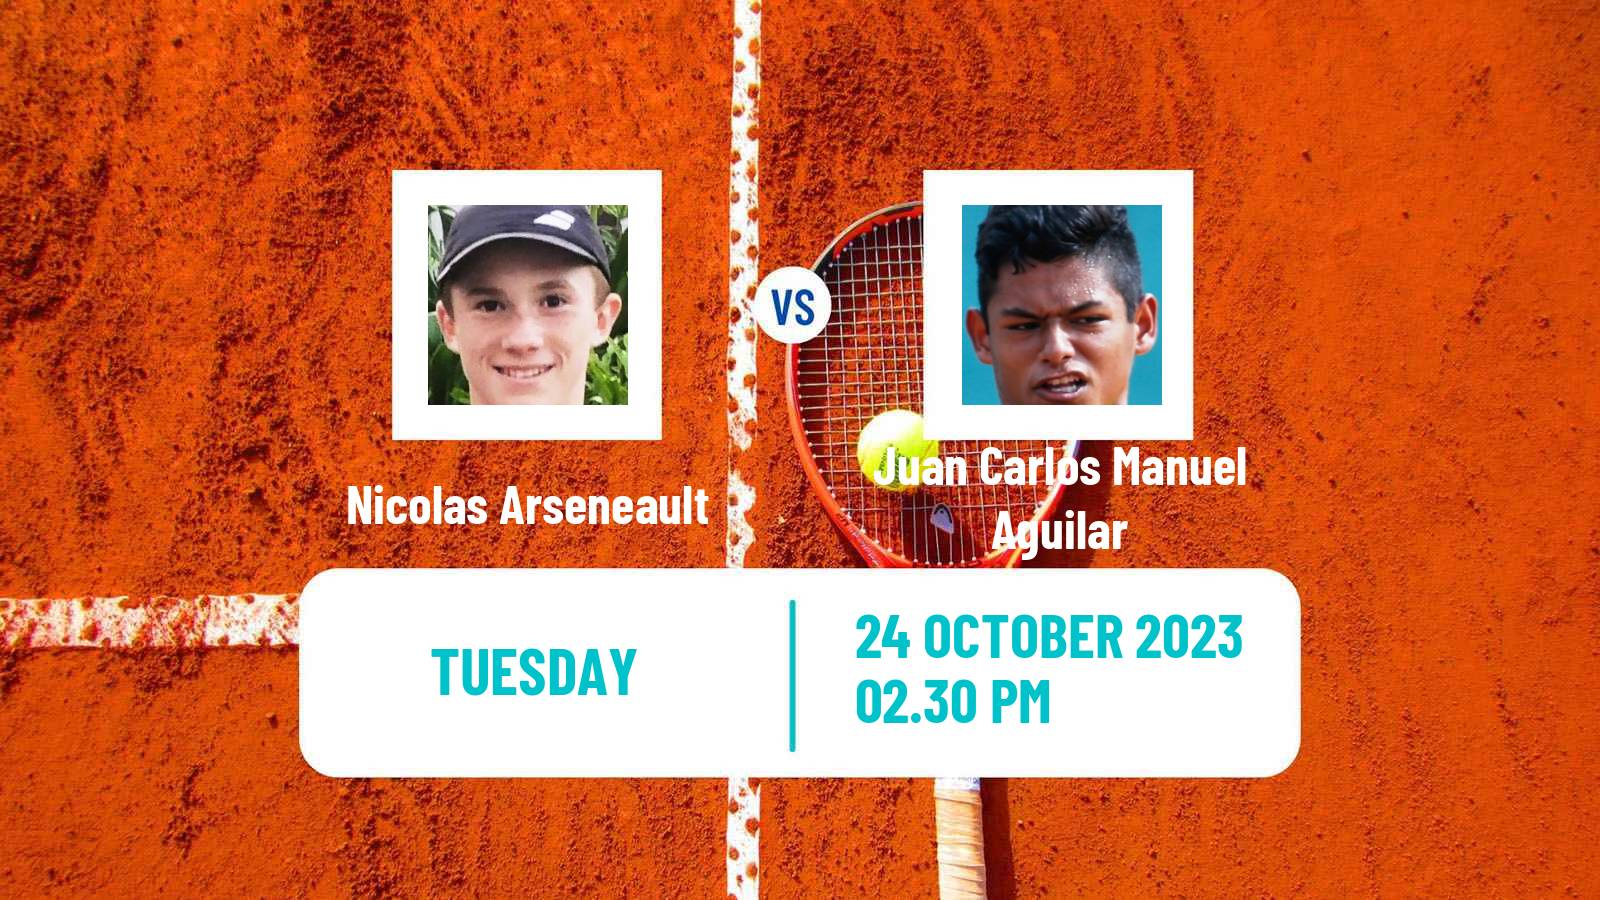 Tennis ITF M25 Saint Augustin Men Nicolas Arseneault - Juan Carlos Manuel Aguilar